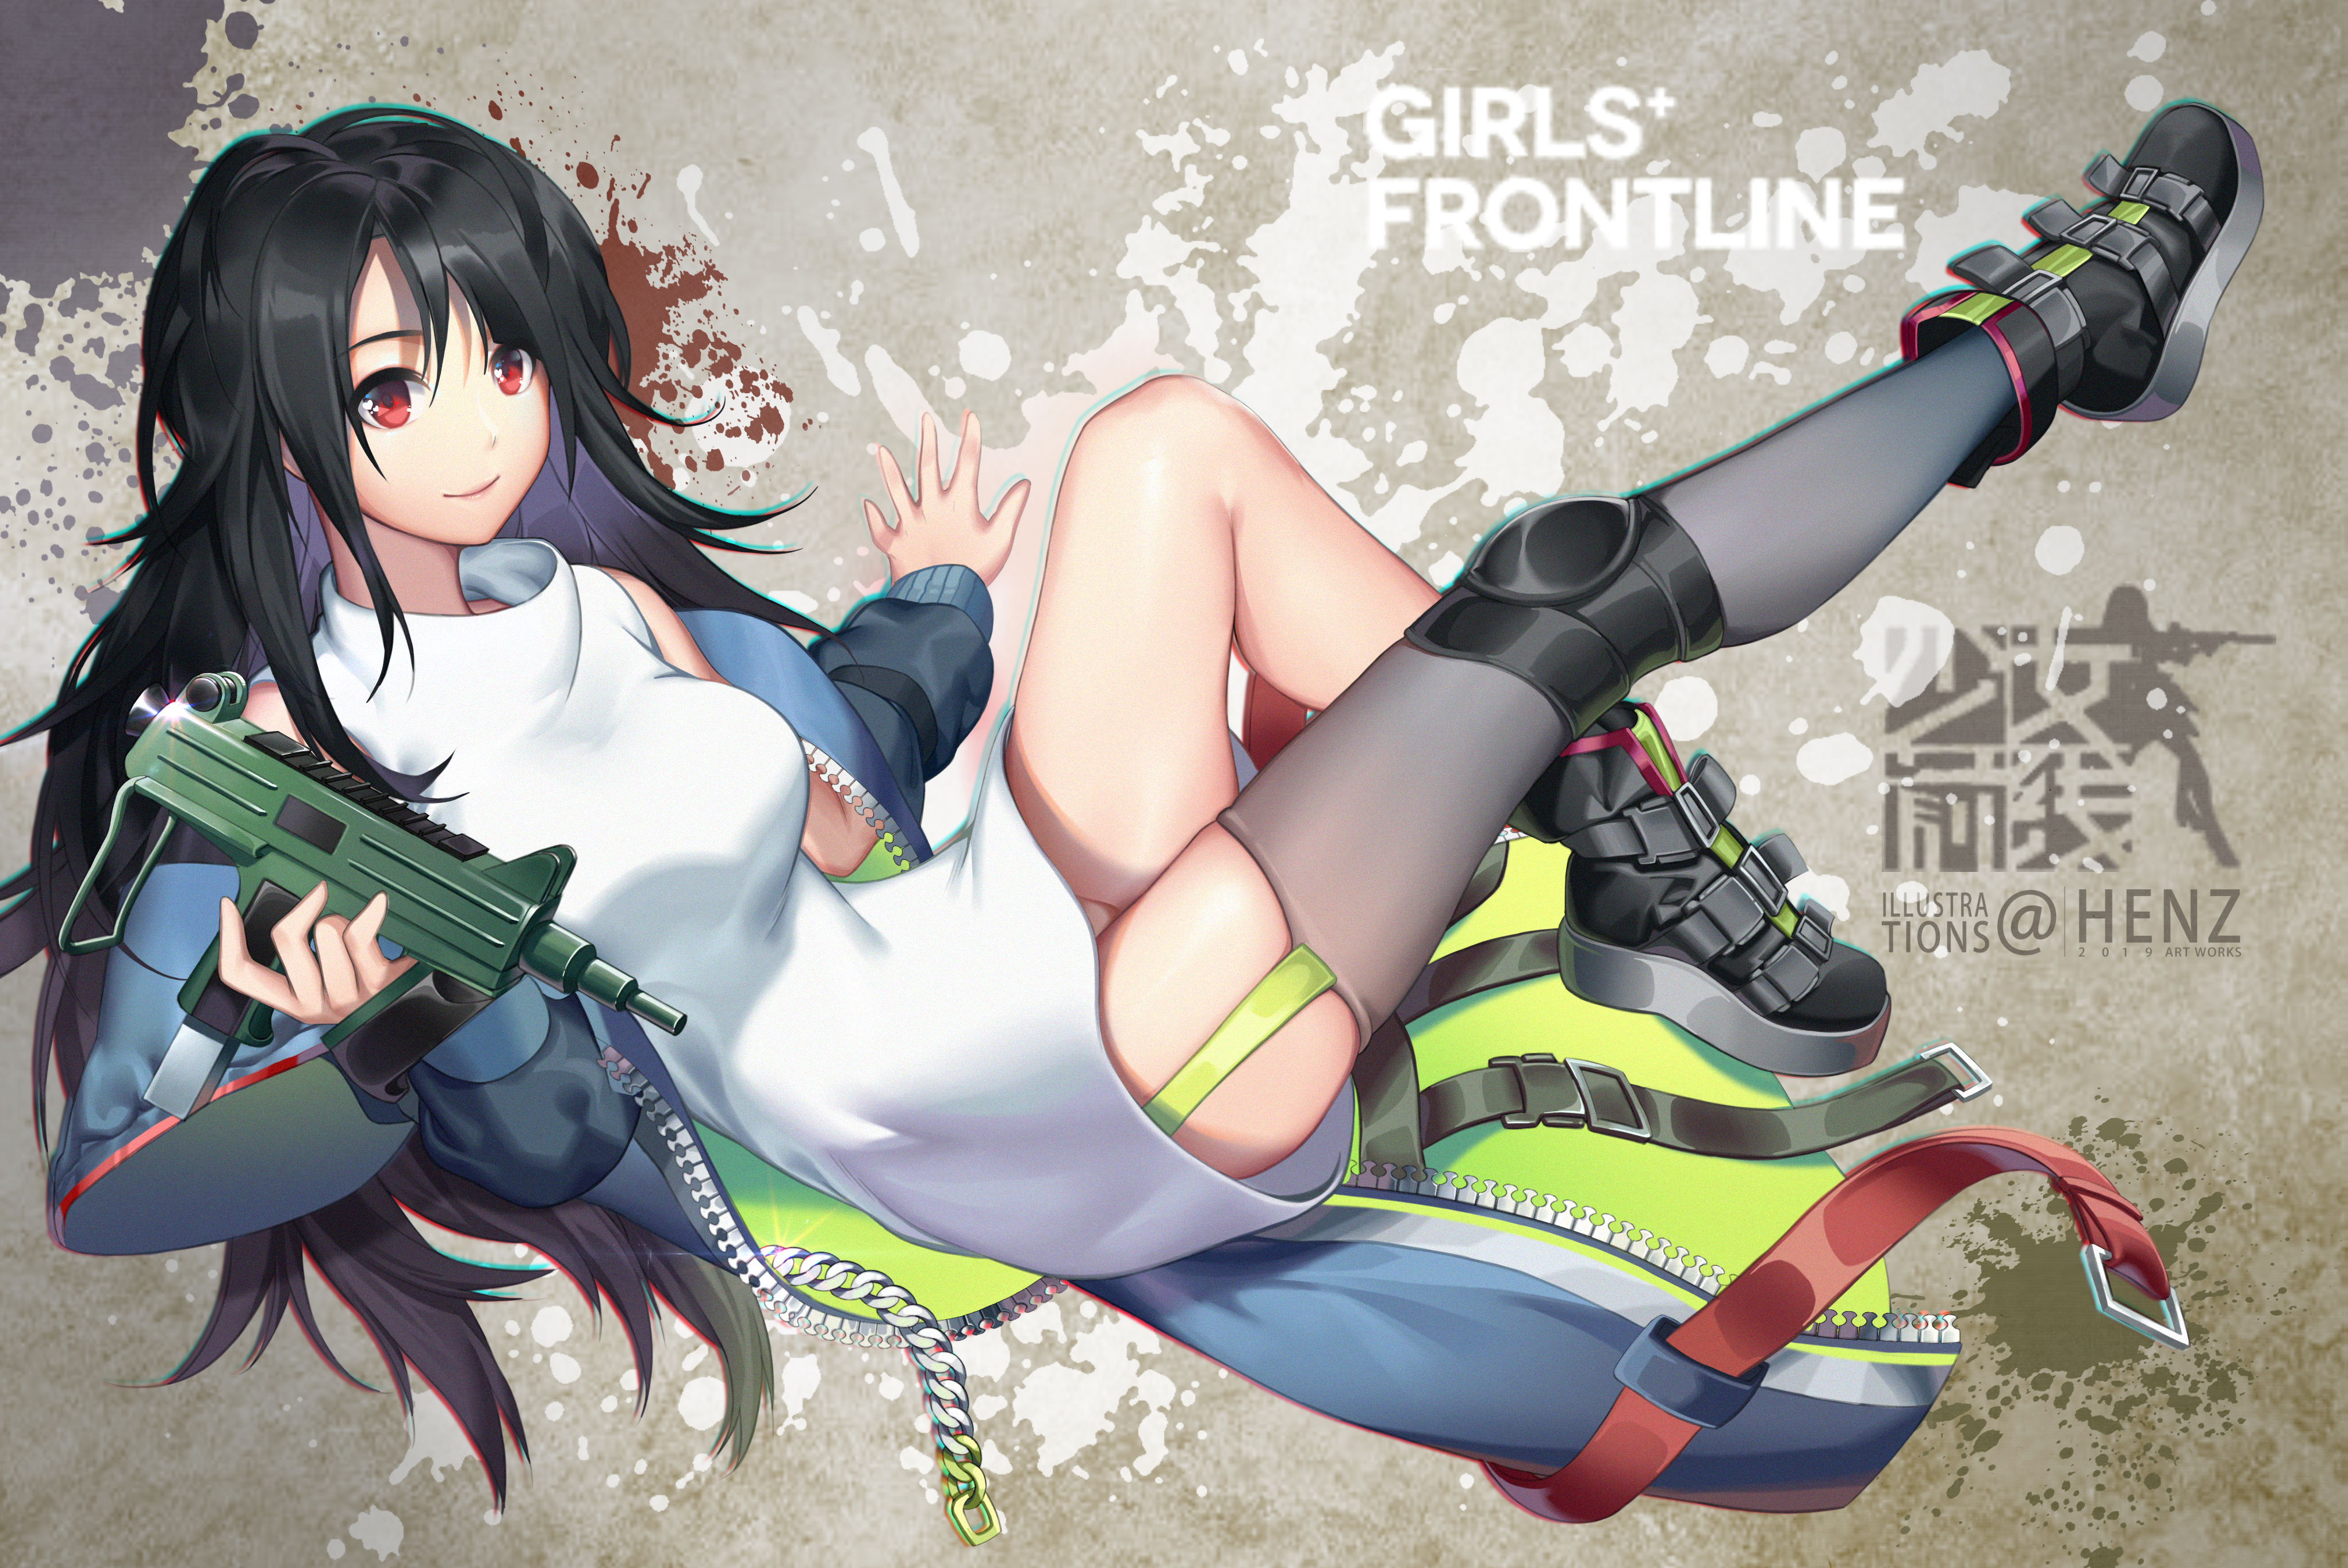 Anime 4084x2728 artwork thigh-highs Girls Frontline C-MS (Girls Frontline) anime girls Henz